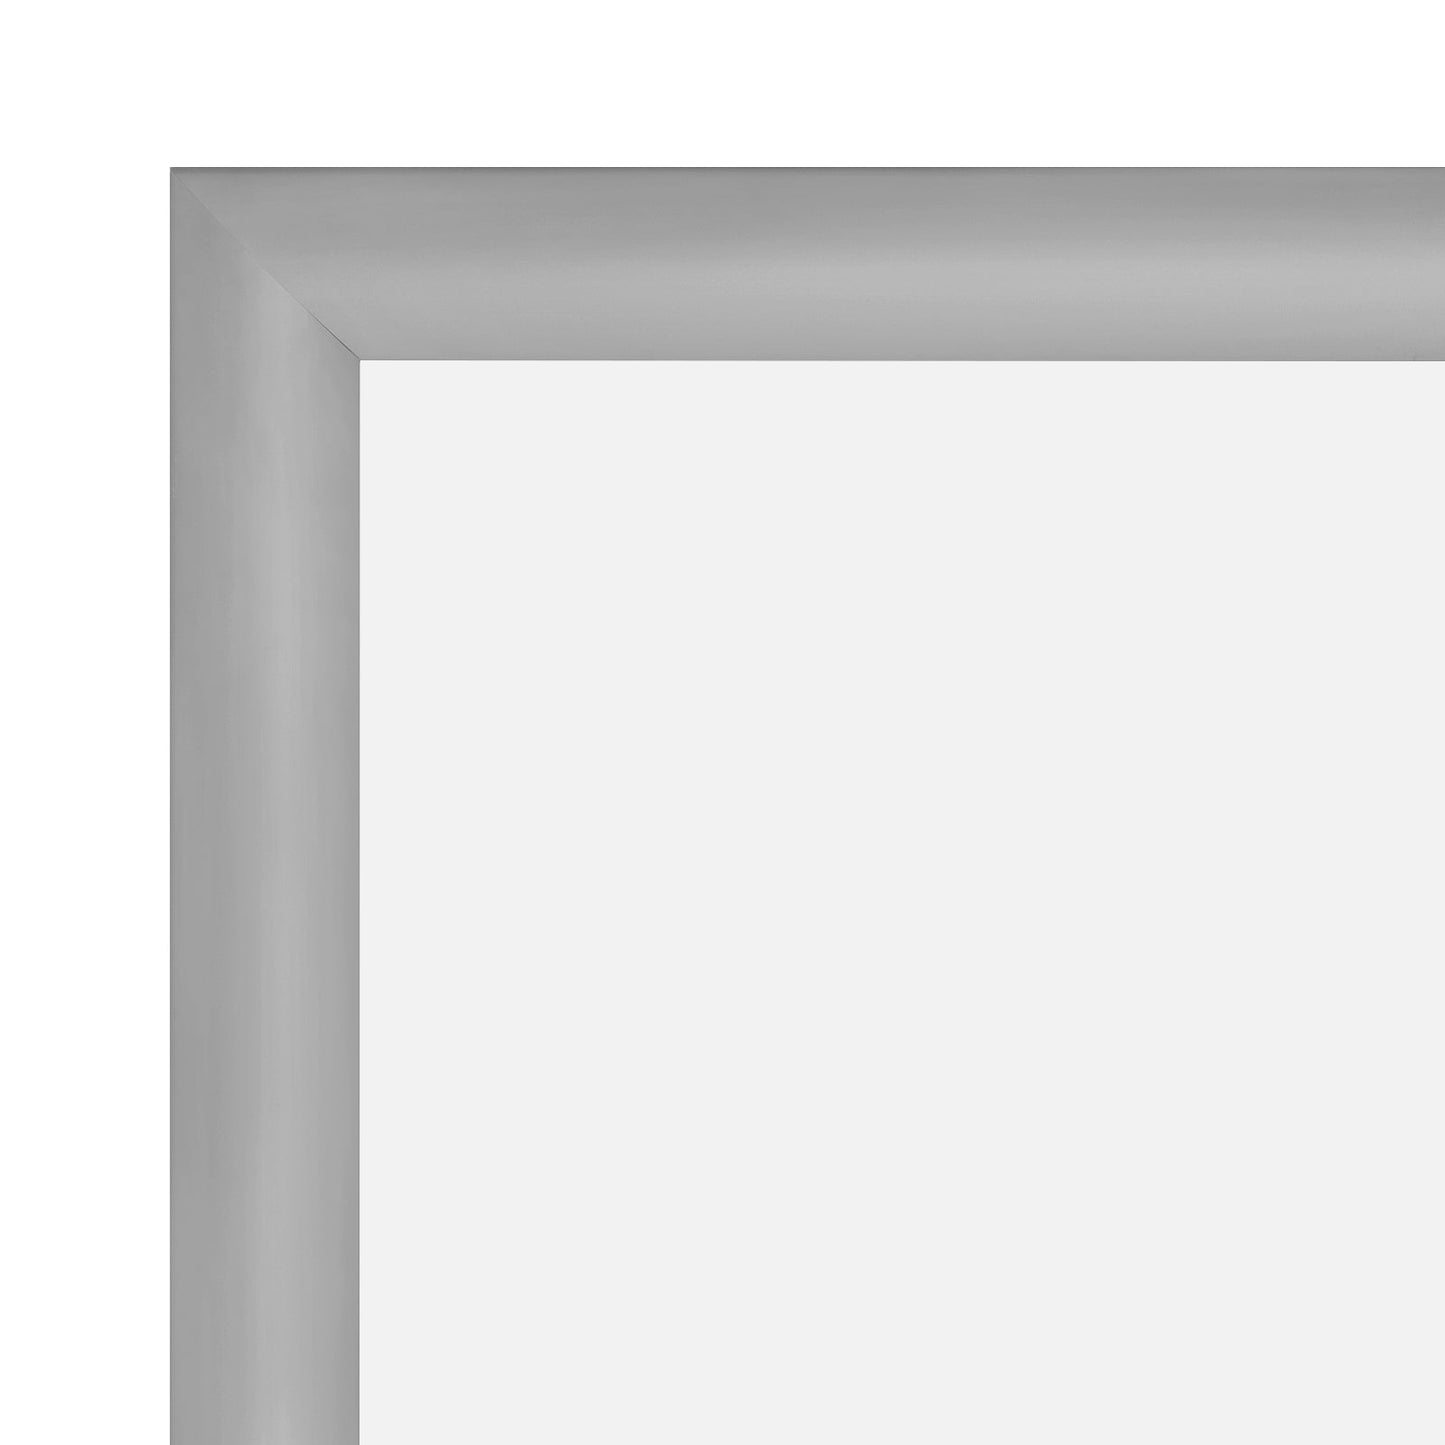 13.5x40 Silver SnapeZo® Snap Frame - 1.2" Profile